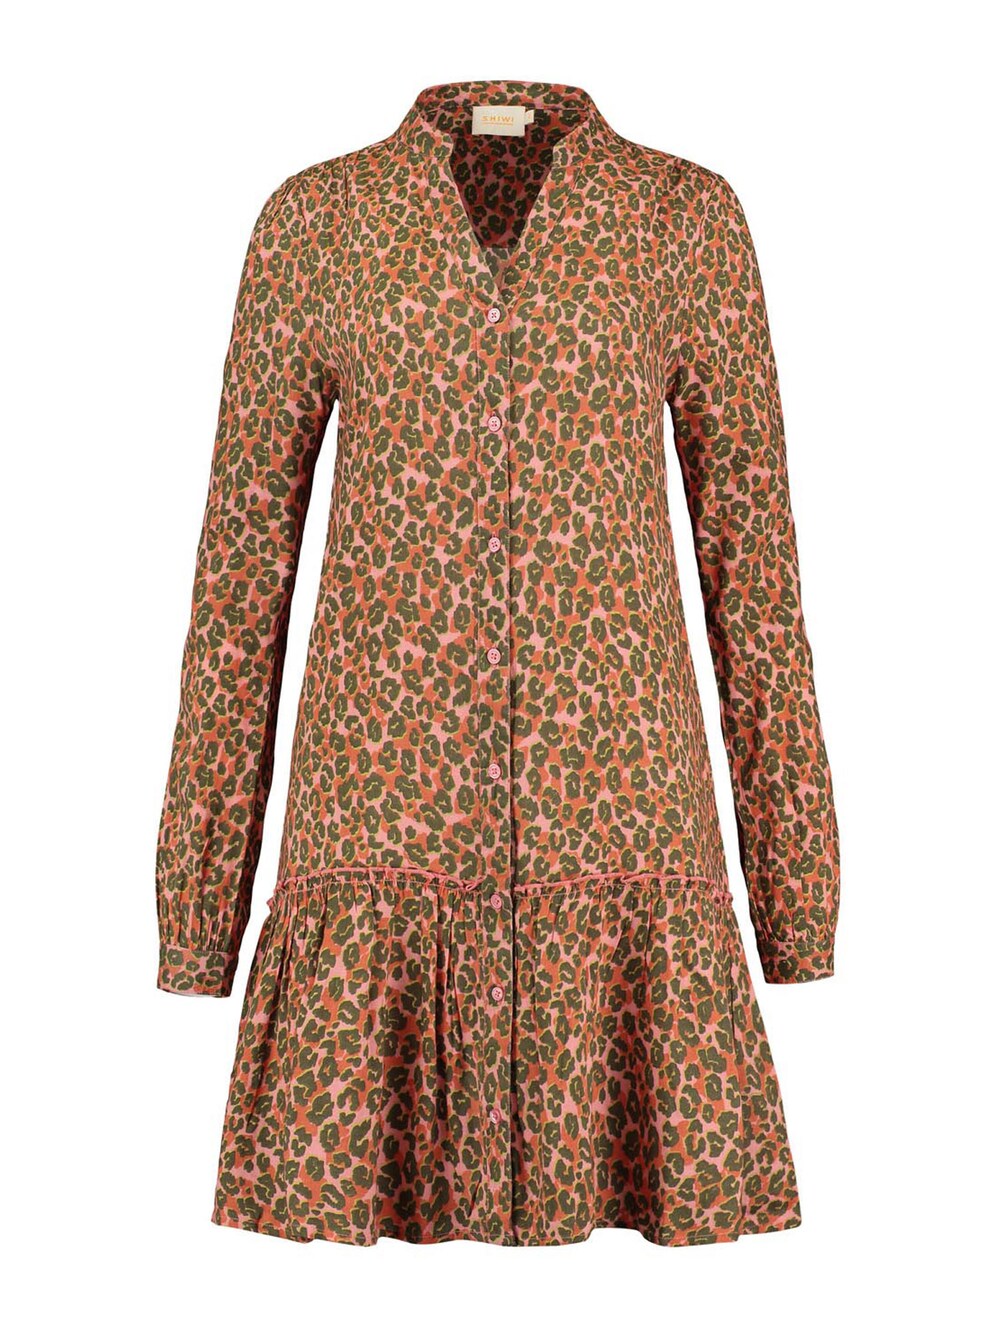 Рубашка-платье Shiwi TUVALU, смешанные цвета